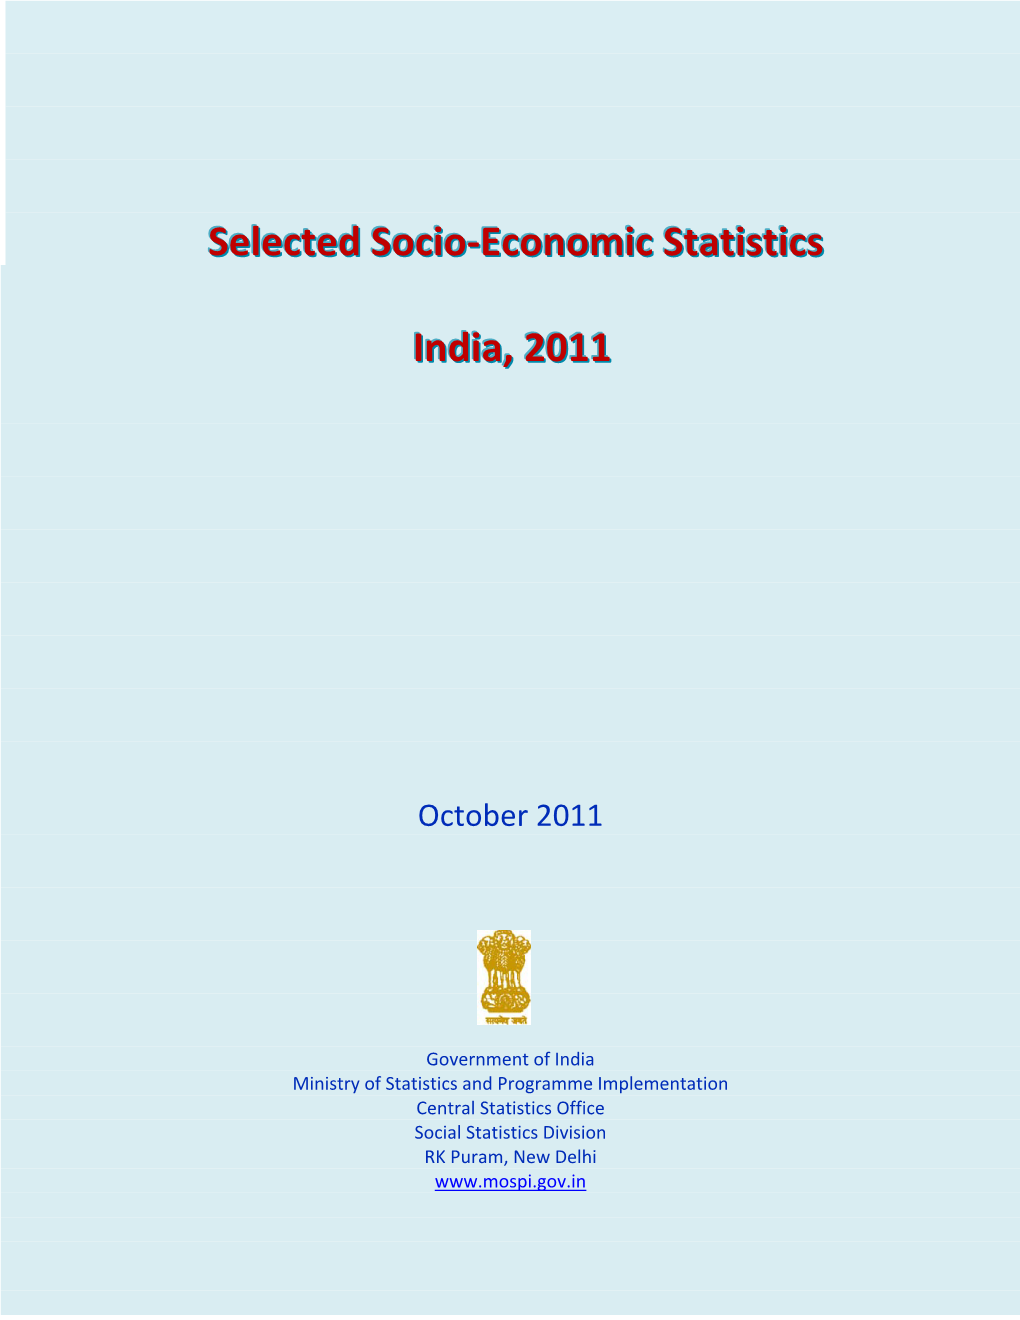 Selected Socio-Economic Statistics India, 2011